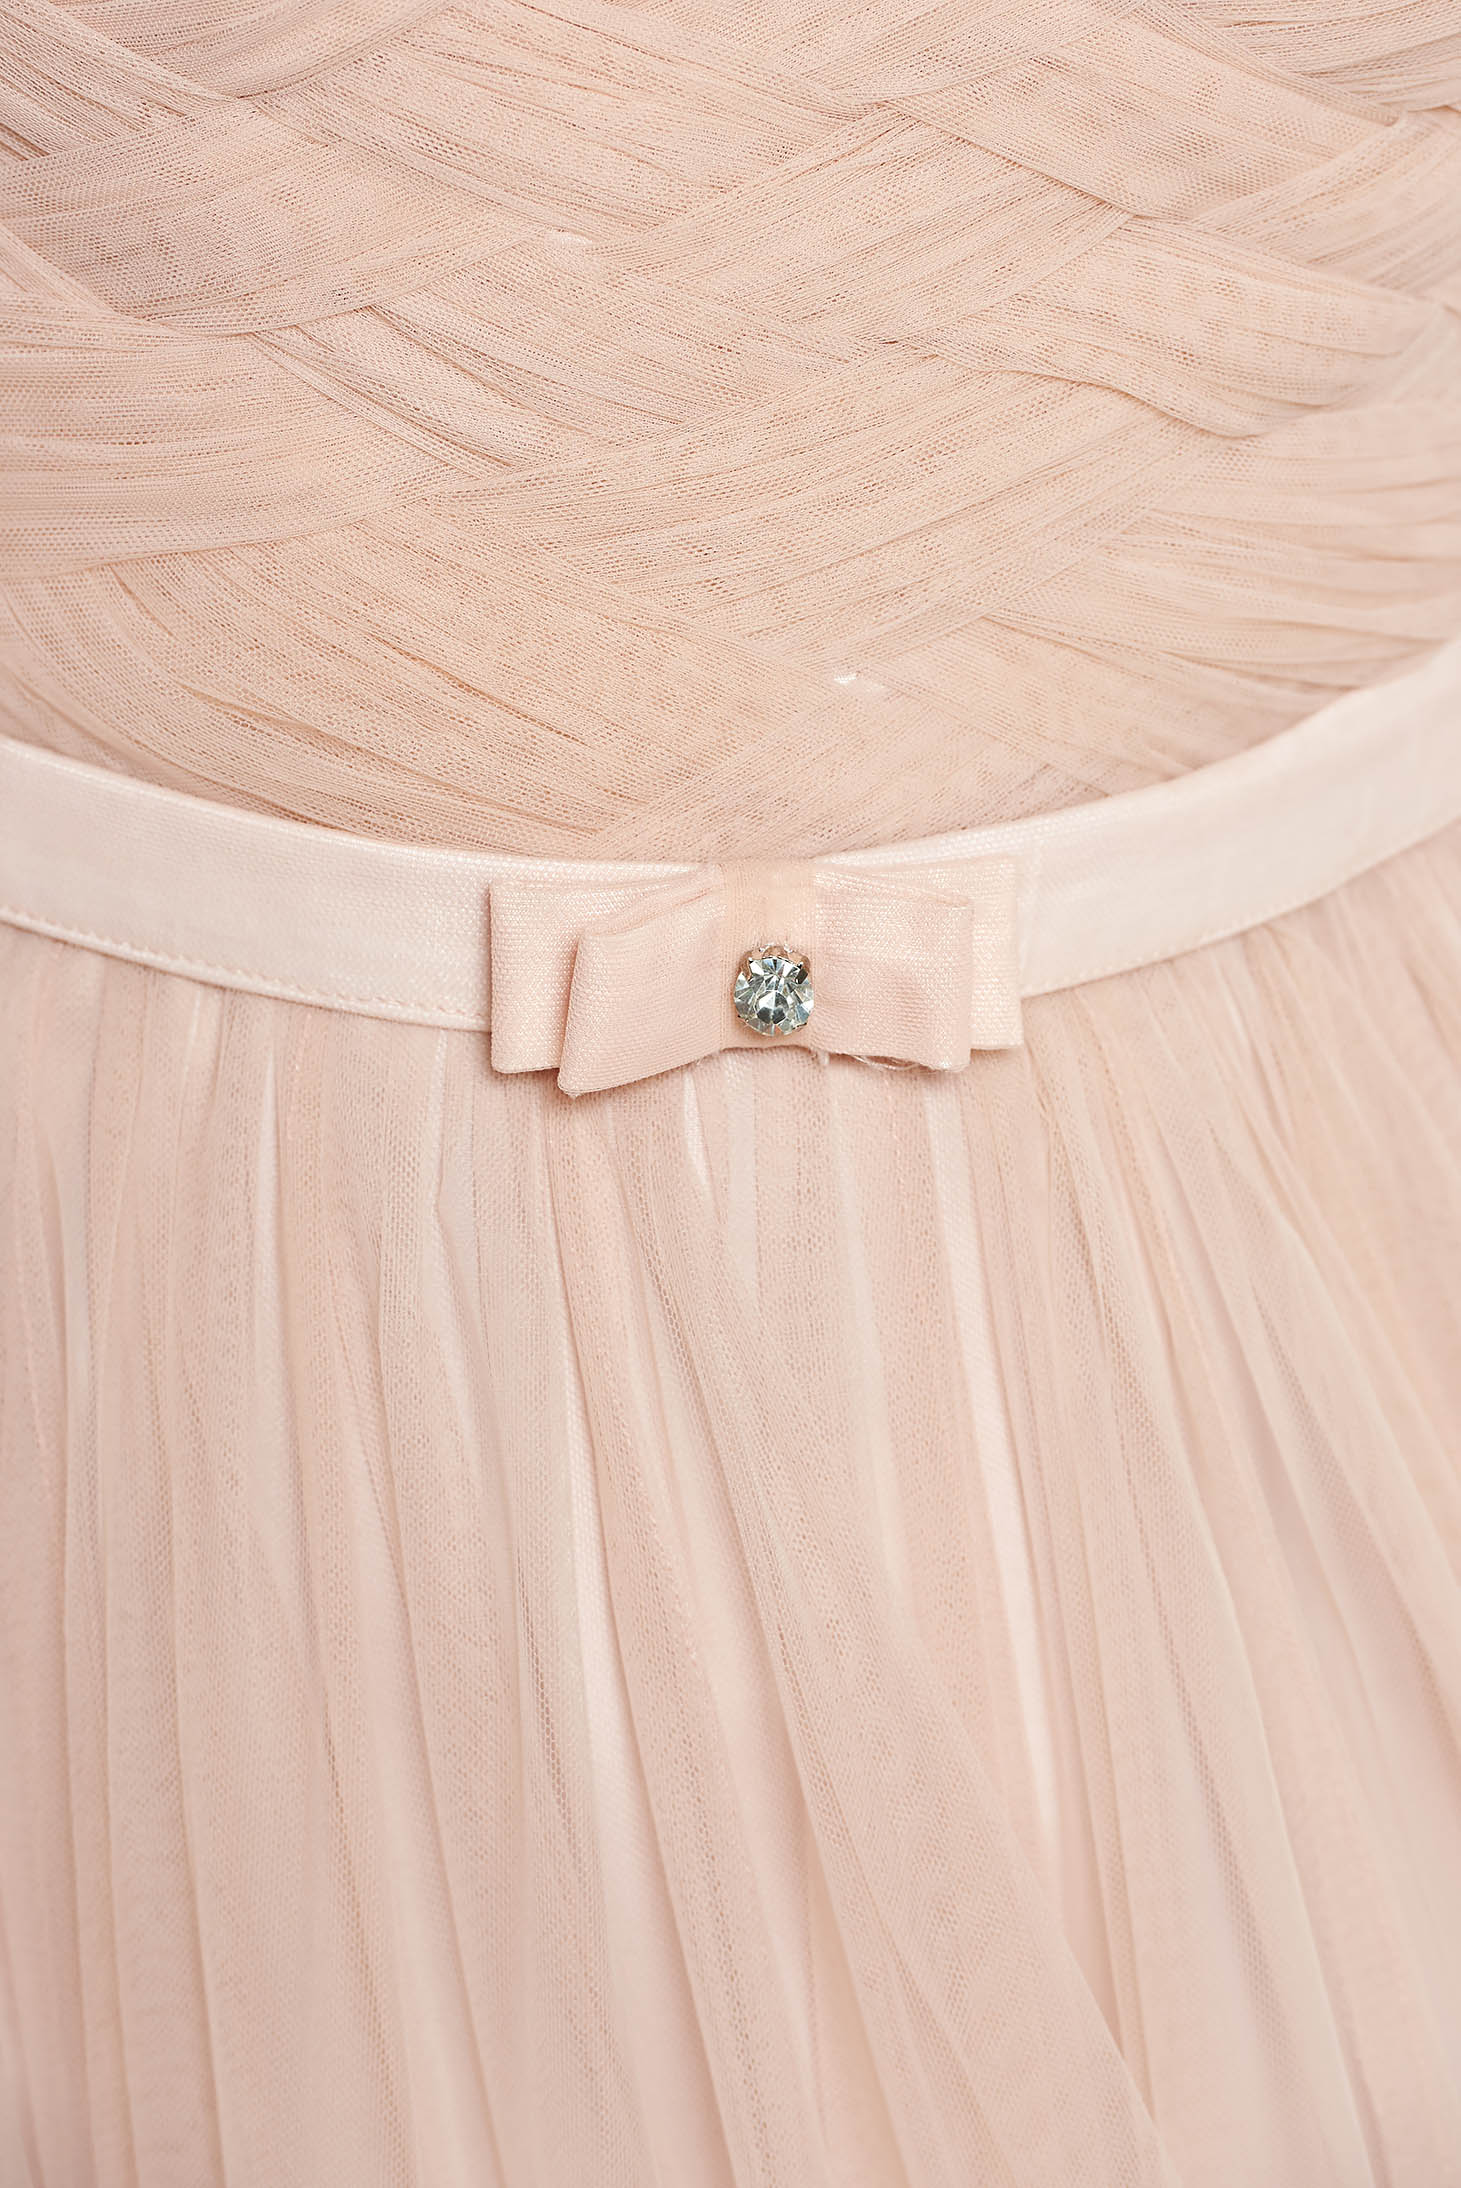 Ana Radu peach evening dresses dress with braces accessorized with tied waistband 5 - StarShinerS.com